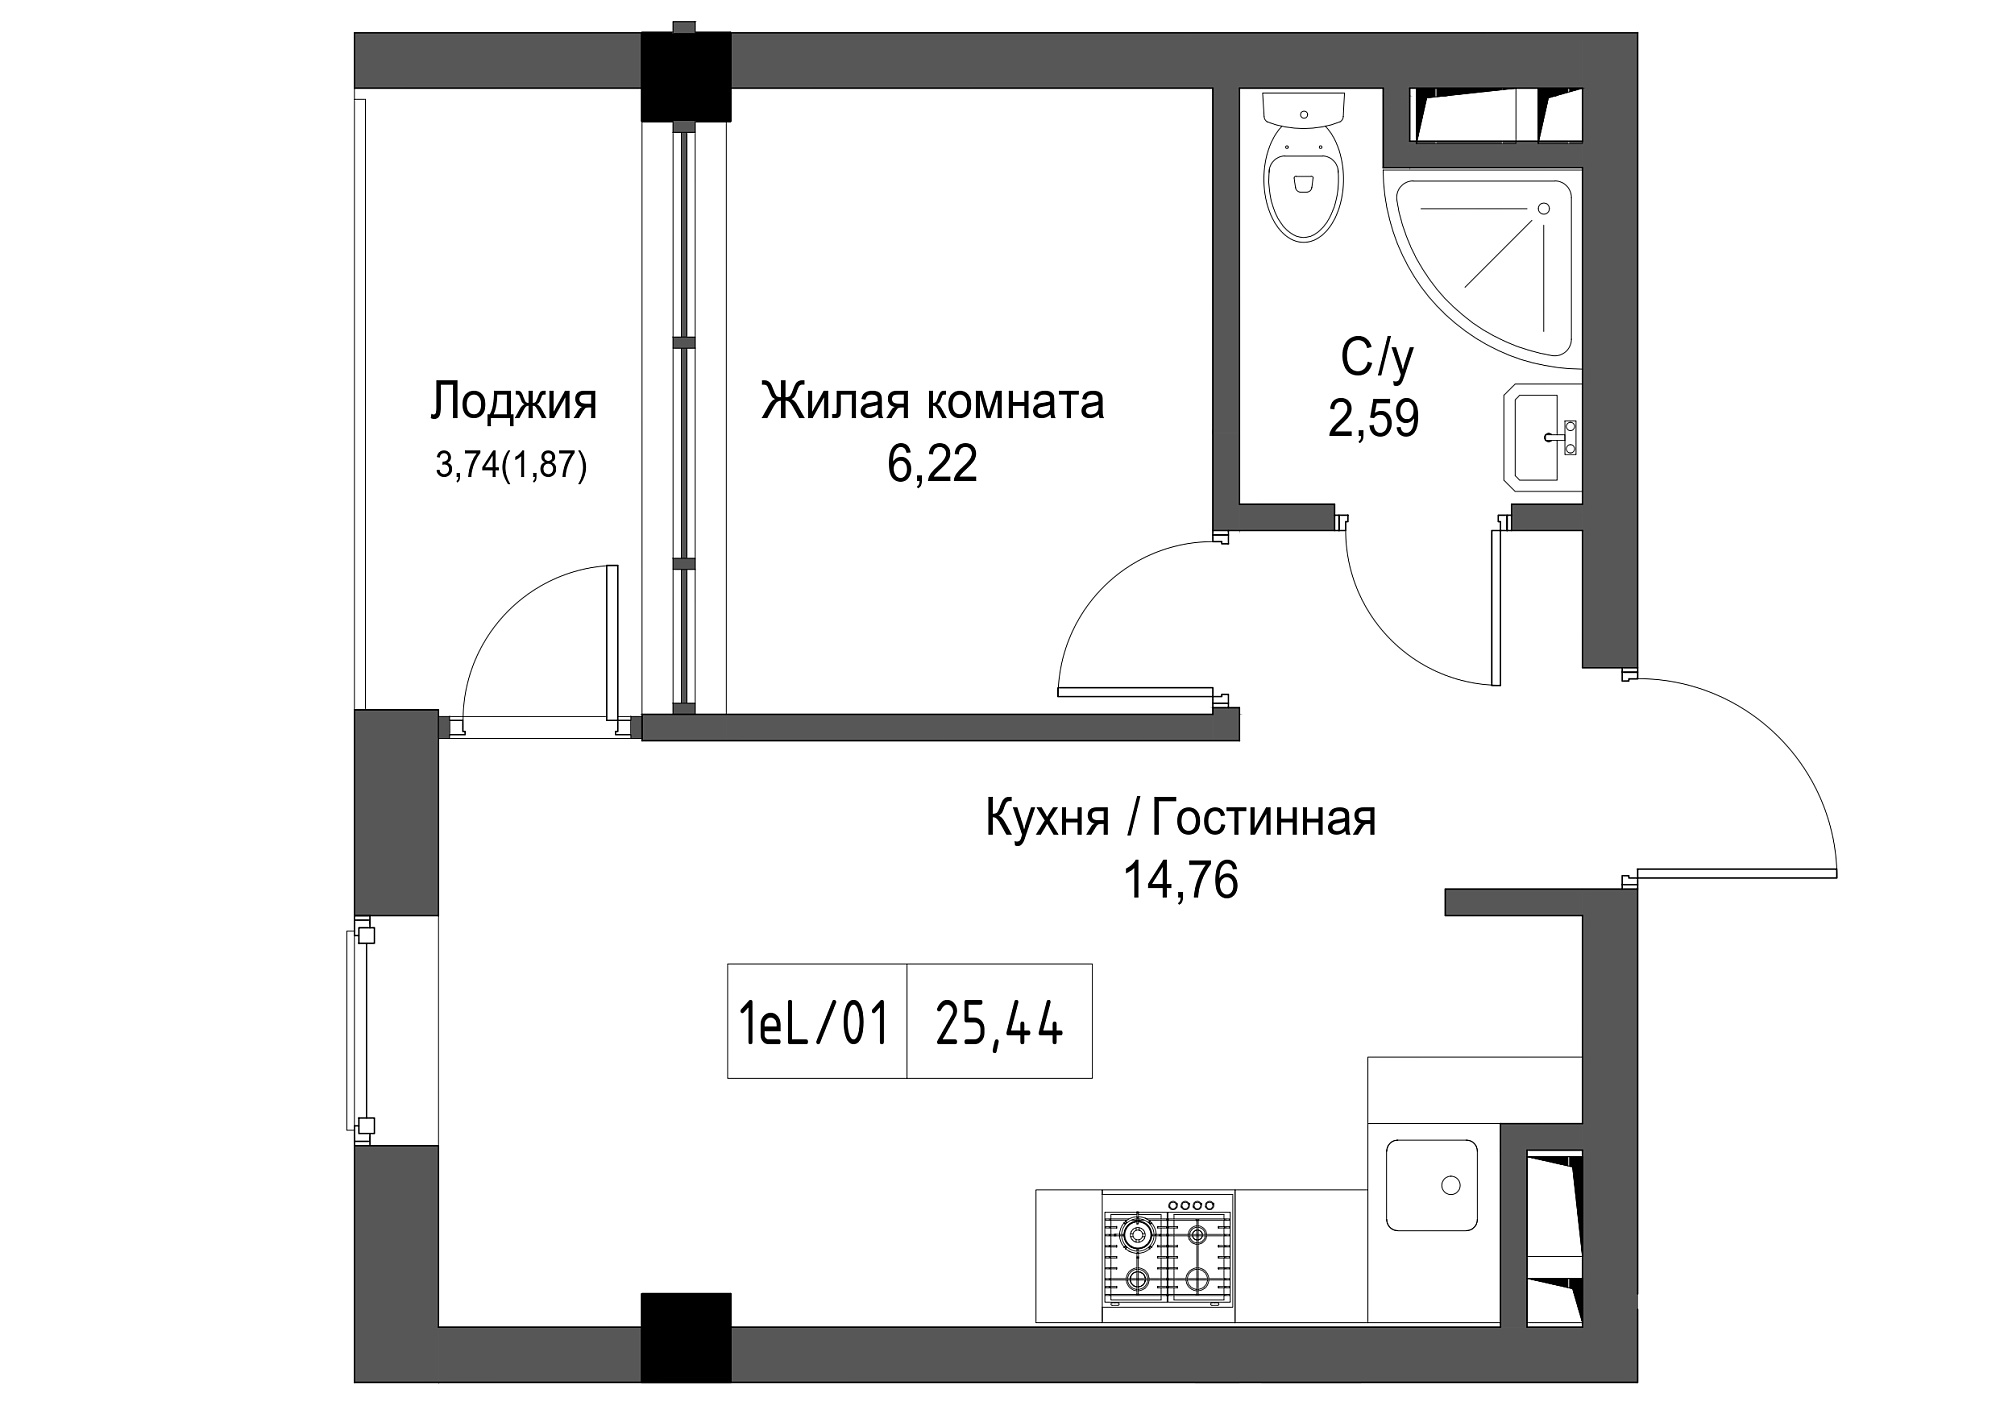 Планування 1-к квартира площею 25.44м2, UM-002-02/0095.